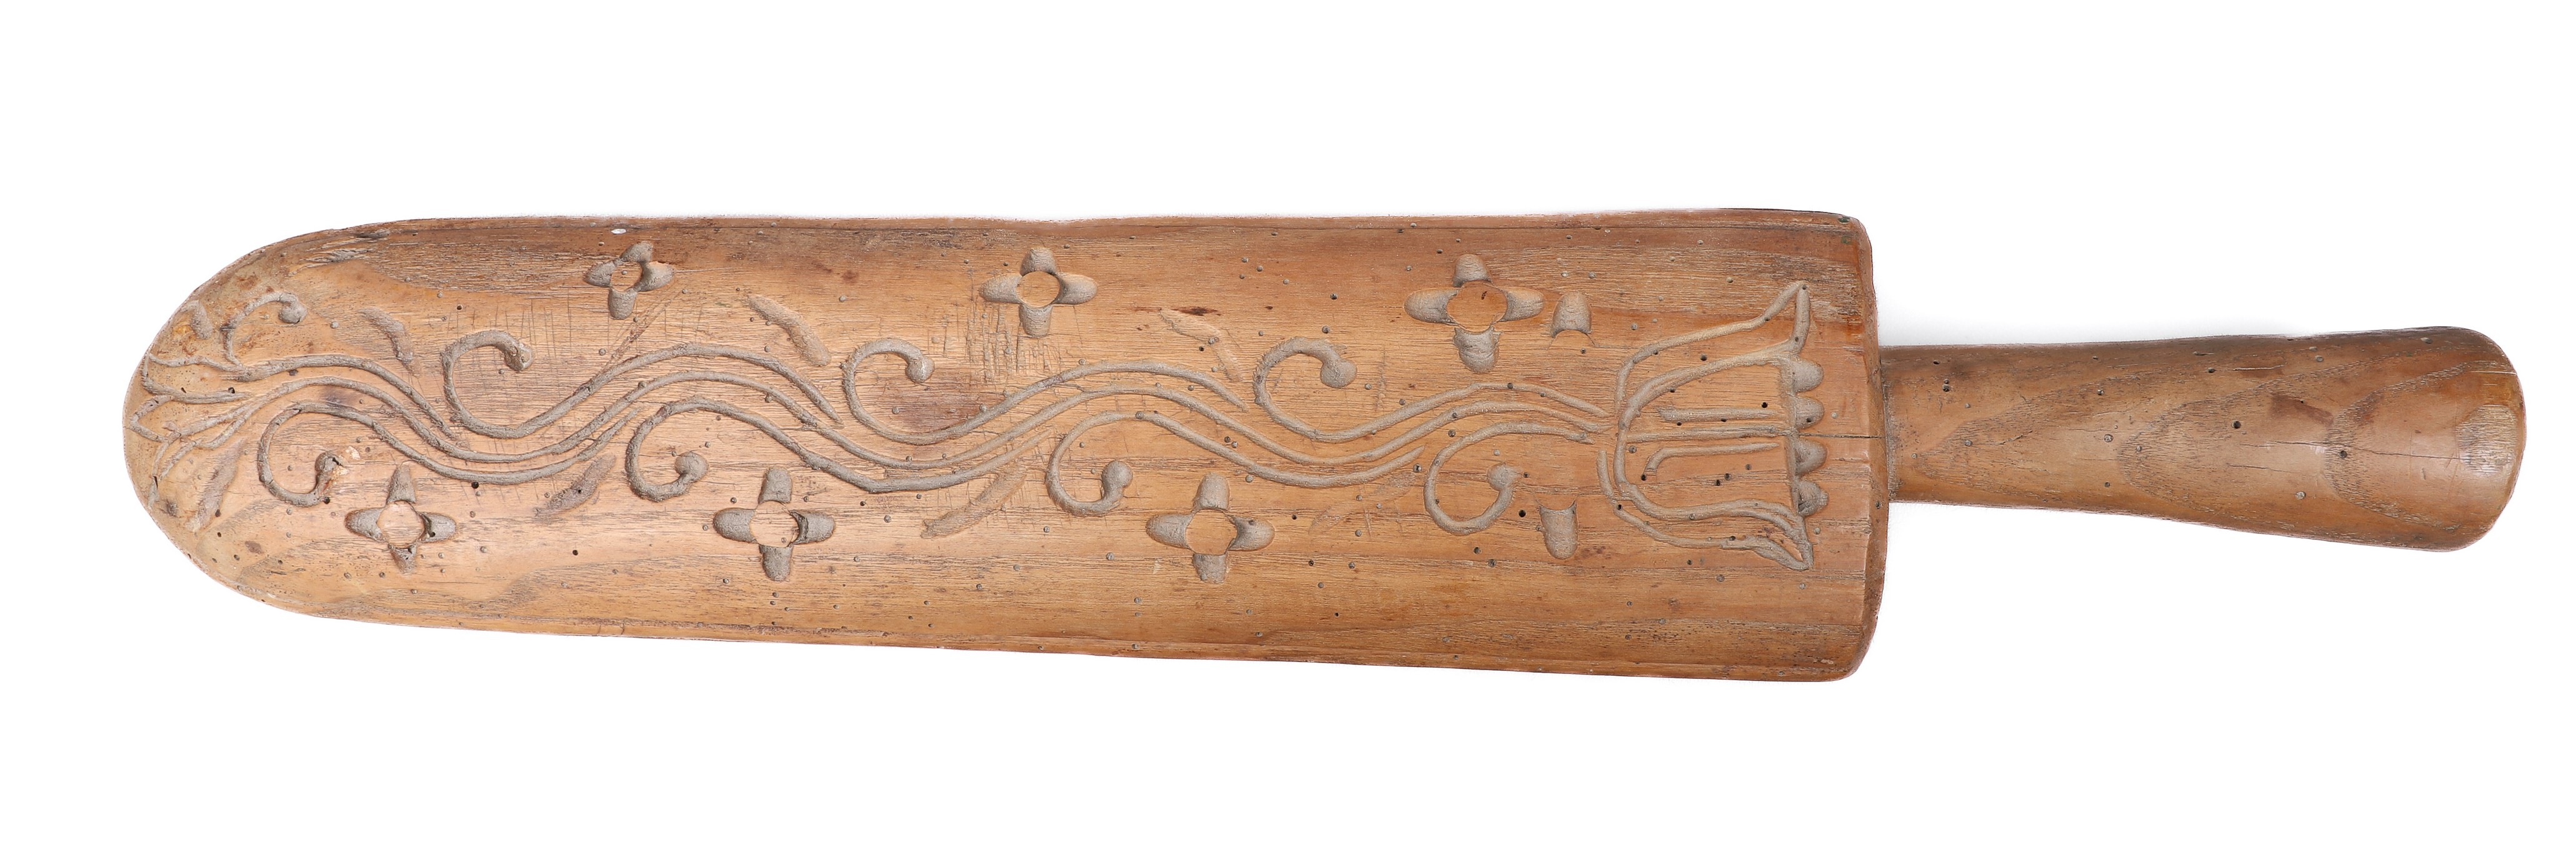 Carved wood mangle board, end handle,